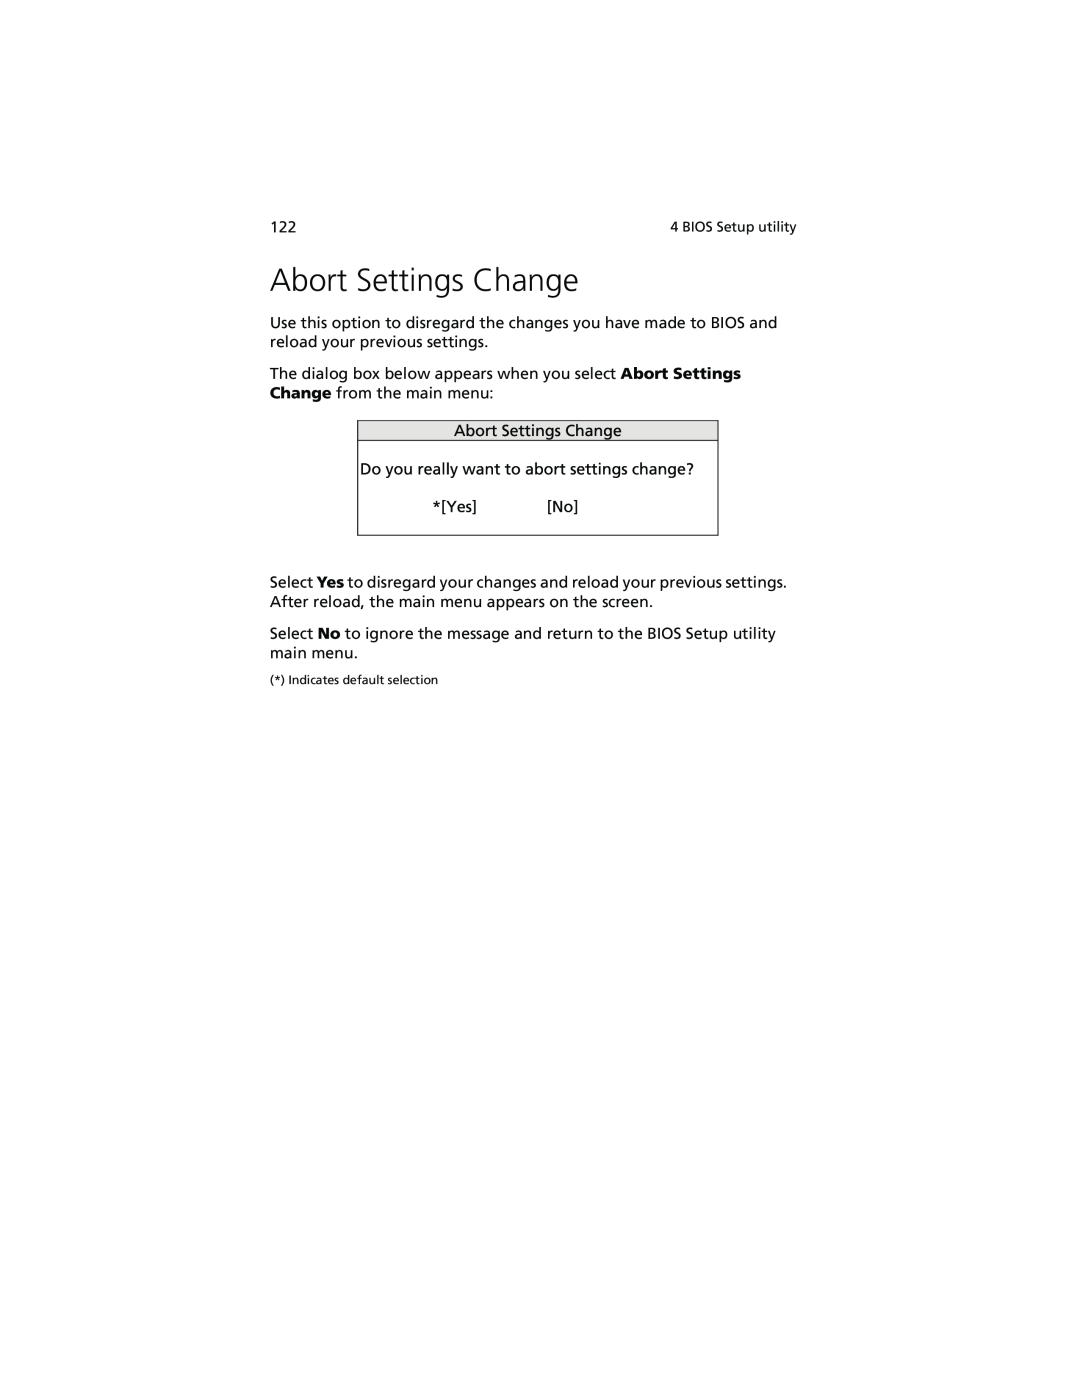 Acer Altos G610 manual Abort Settings Change, BIOS Setup utility 